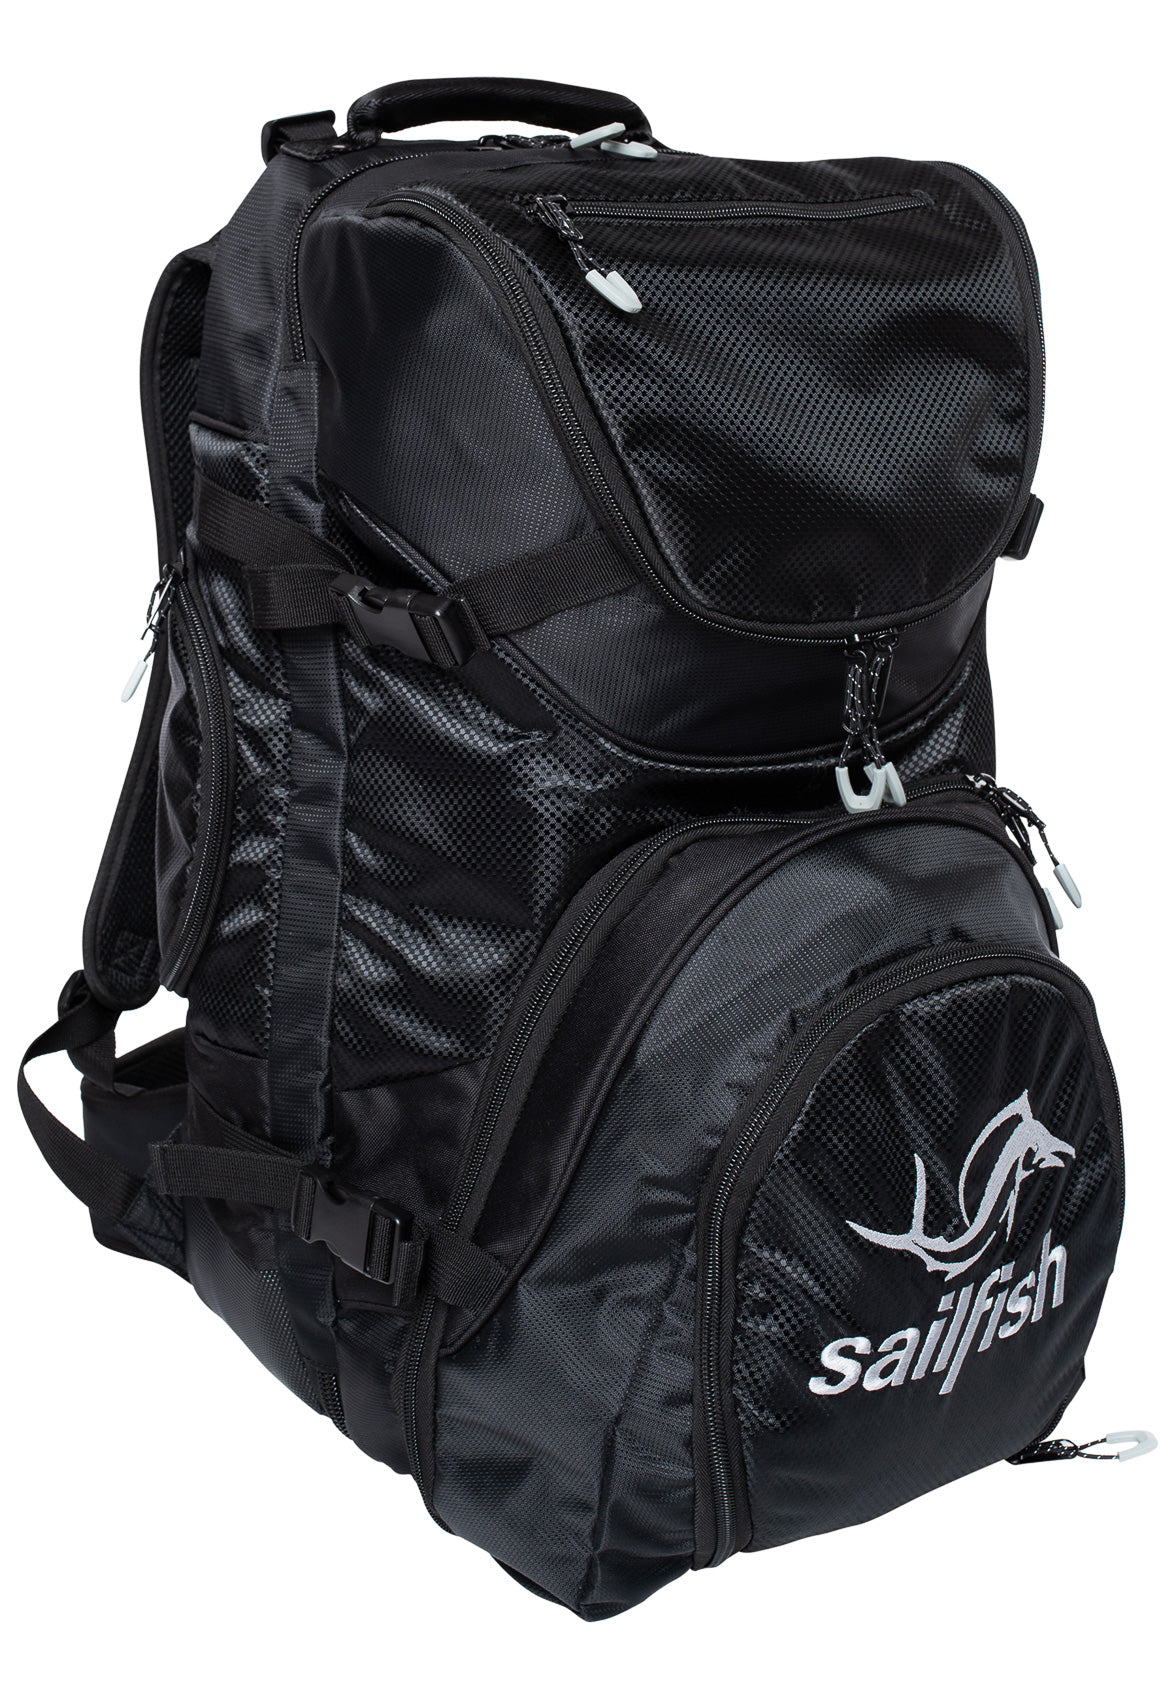 SAILFISH Transition Backpack Kona Black 60L תיק גב בנפח 60 ליטרים